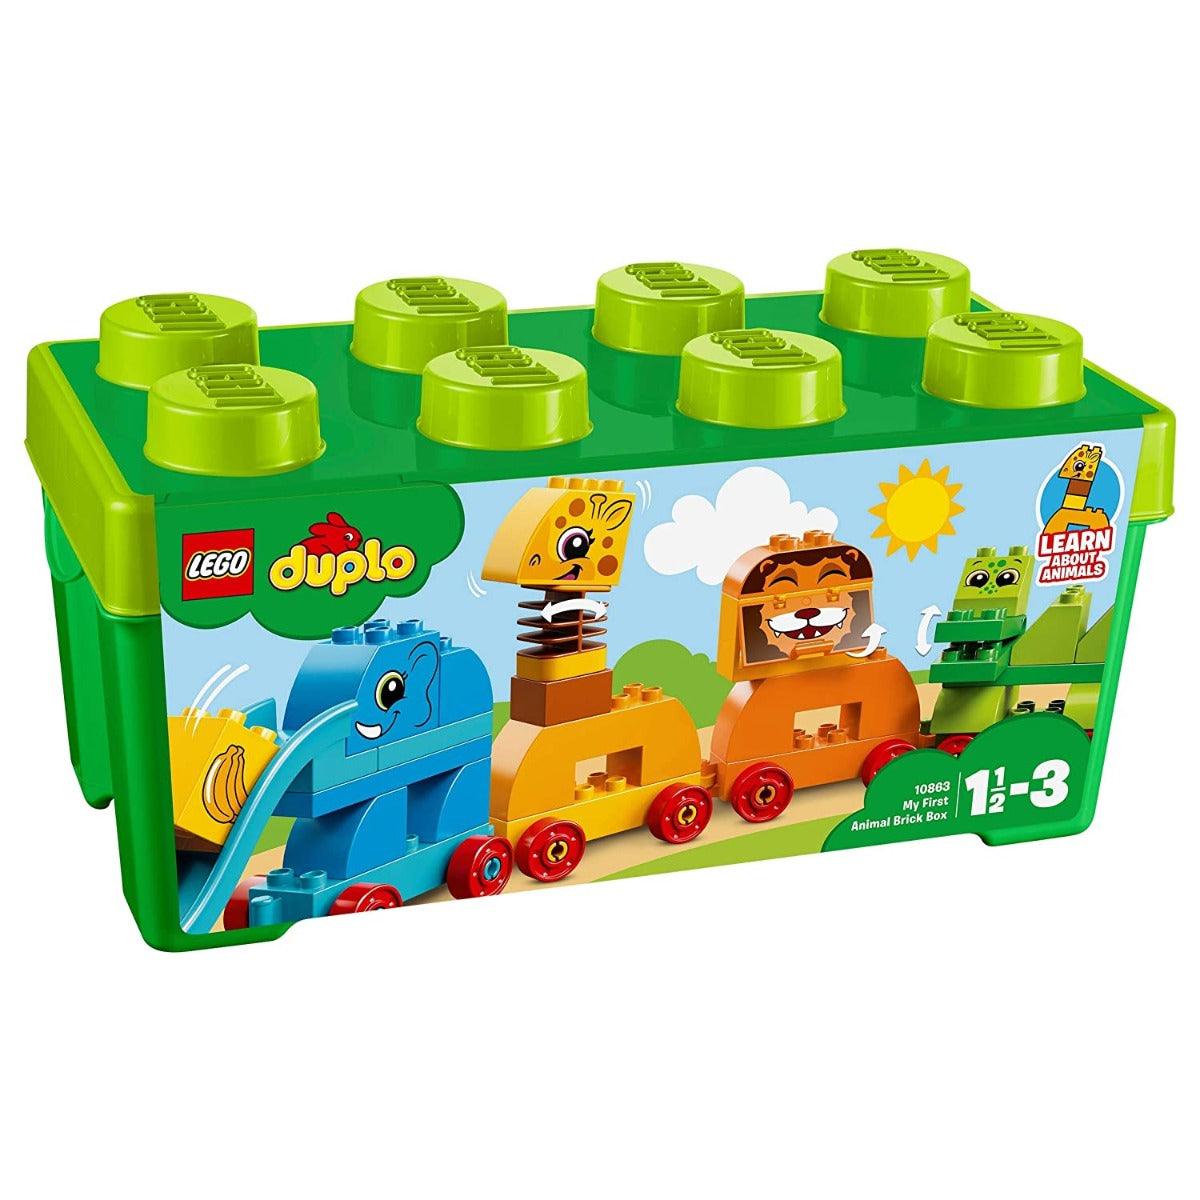 LEGO Duplo My First Animal Brick Box